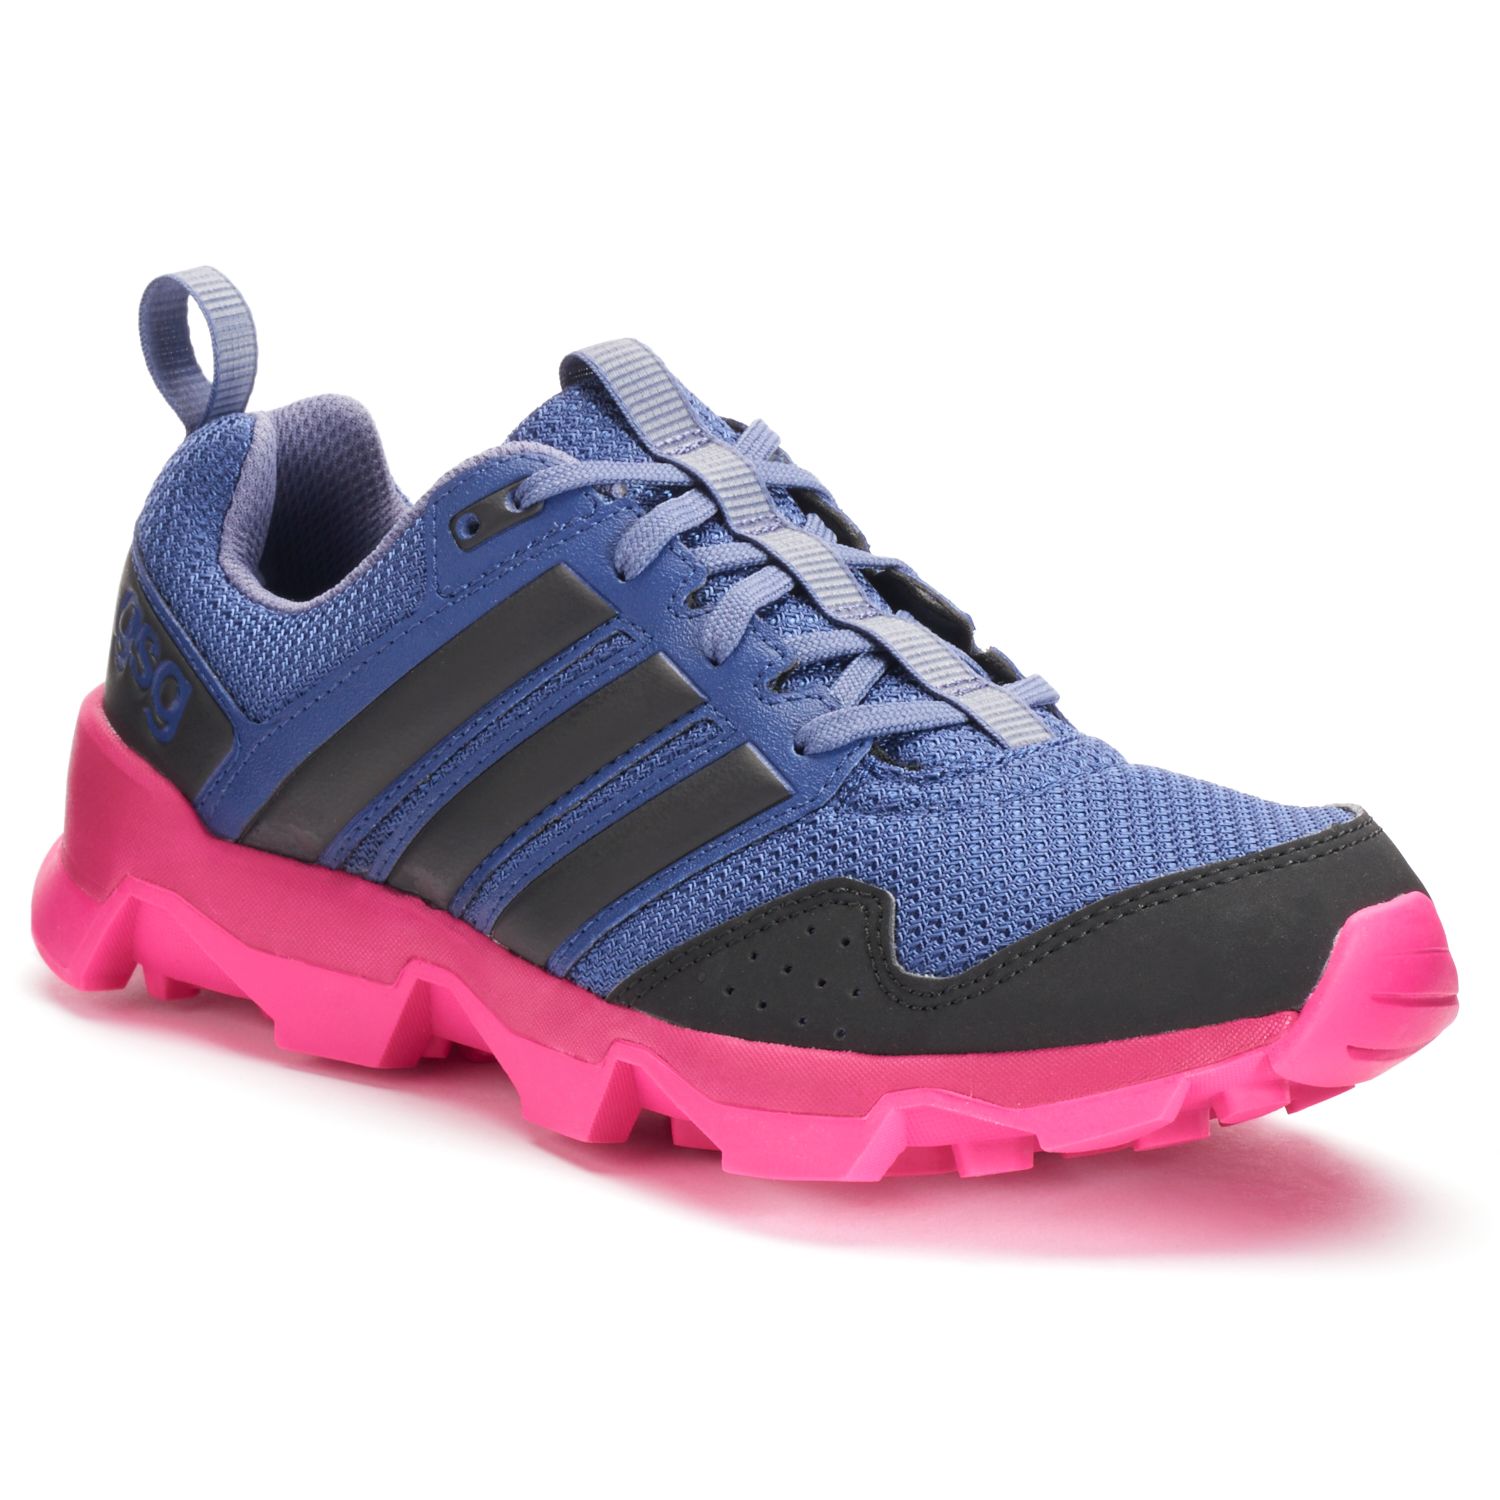 adidas outdoor men's gsg9 trail running shoe